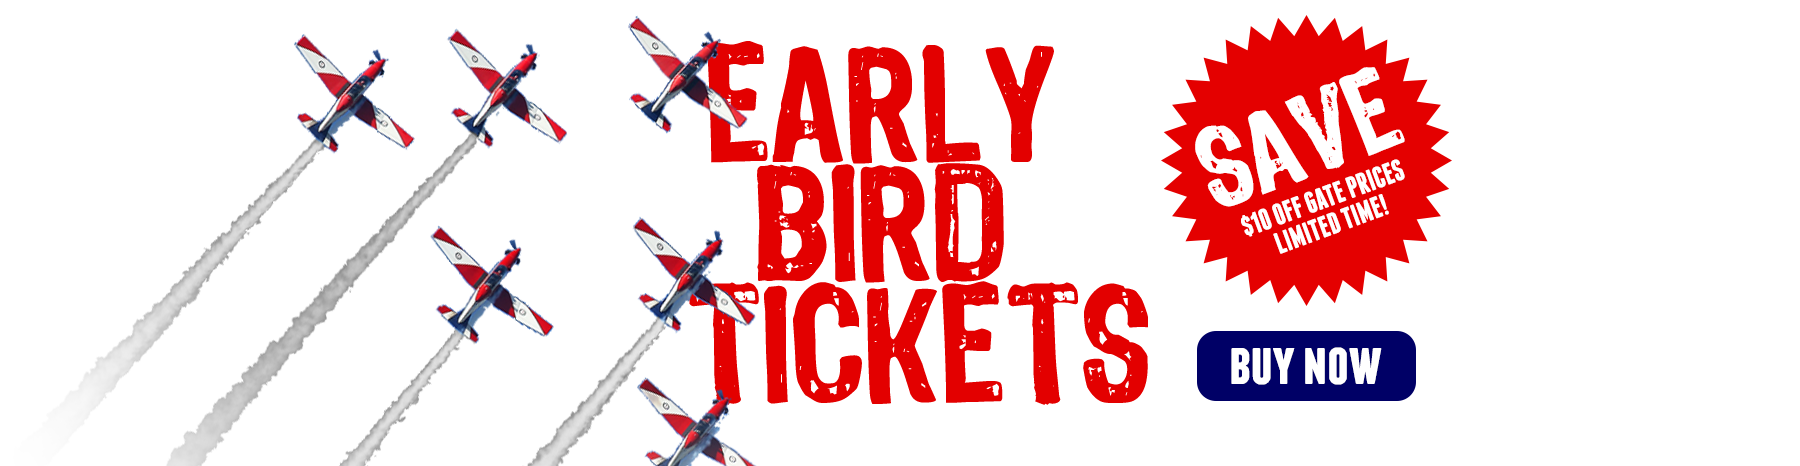 Get Early Bird Tickets